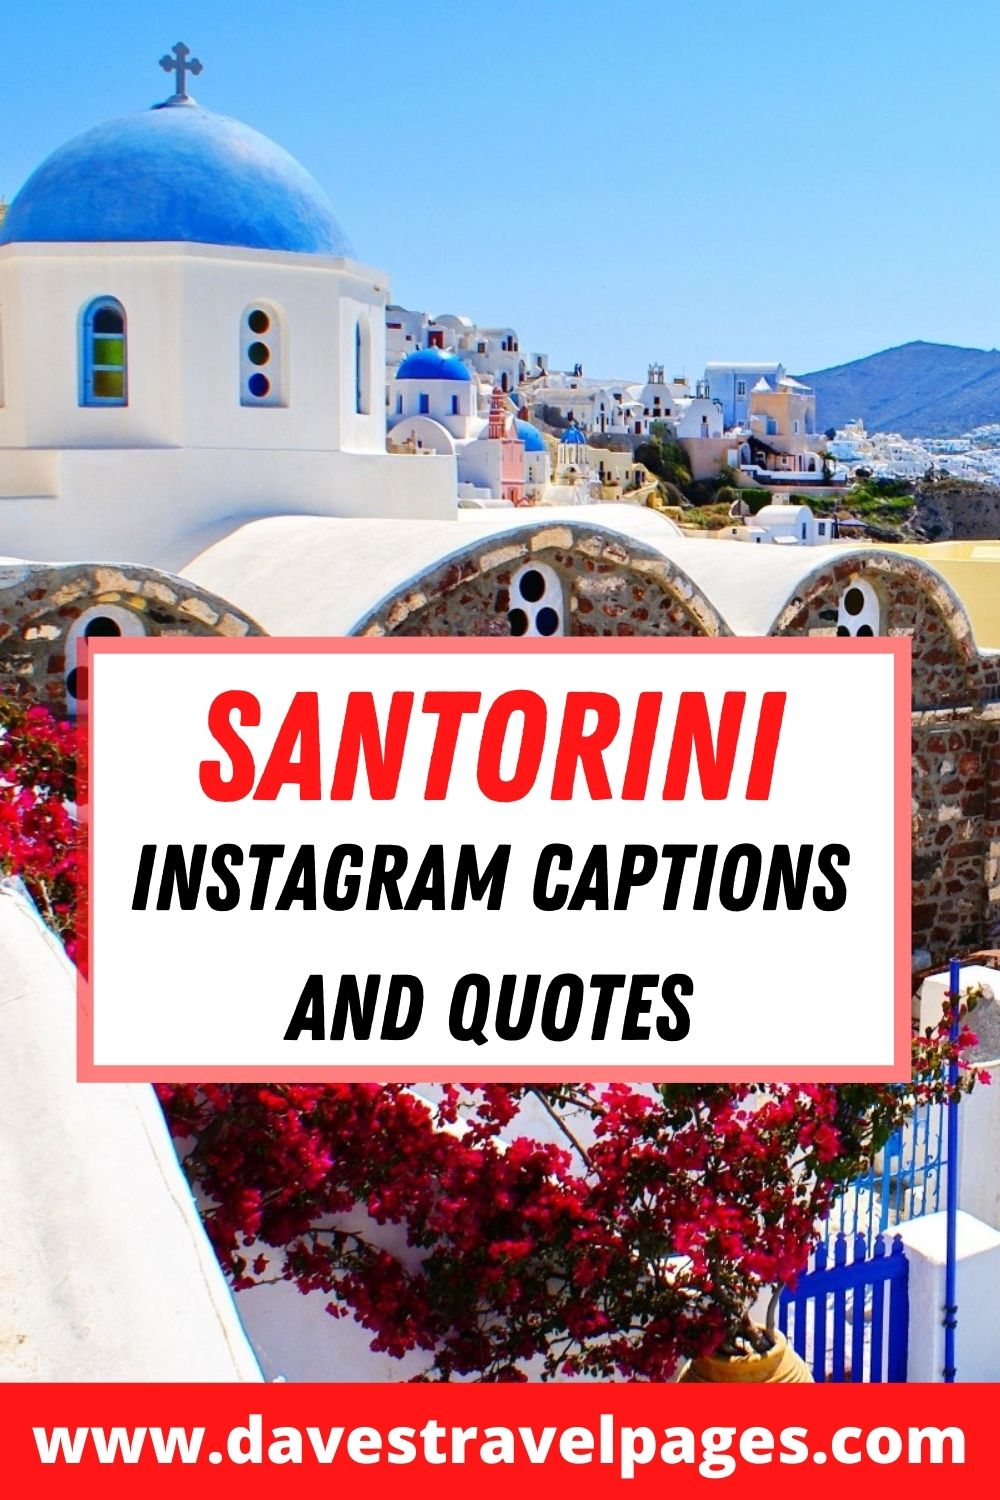 Santorini Instagram Captions and Quotes